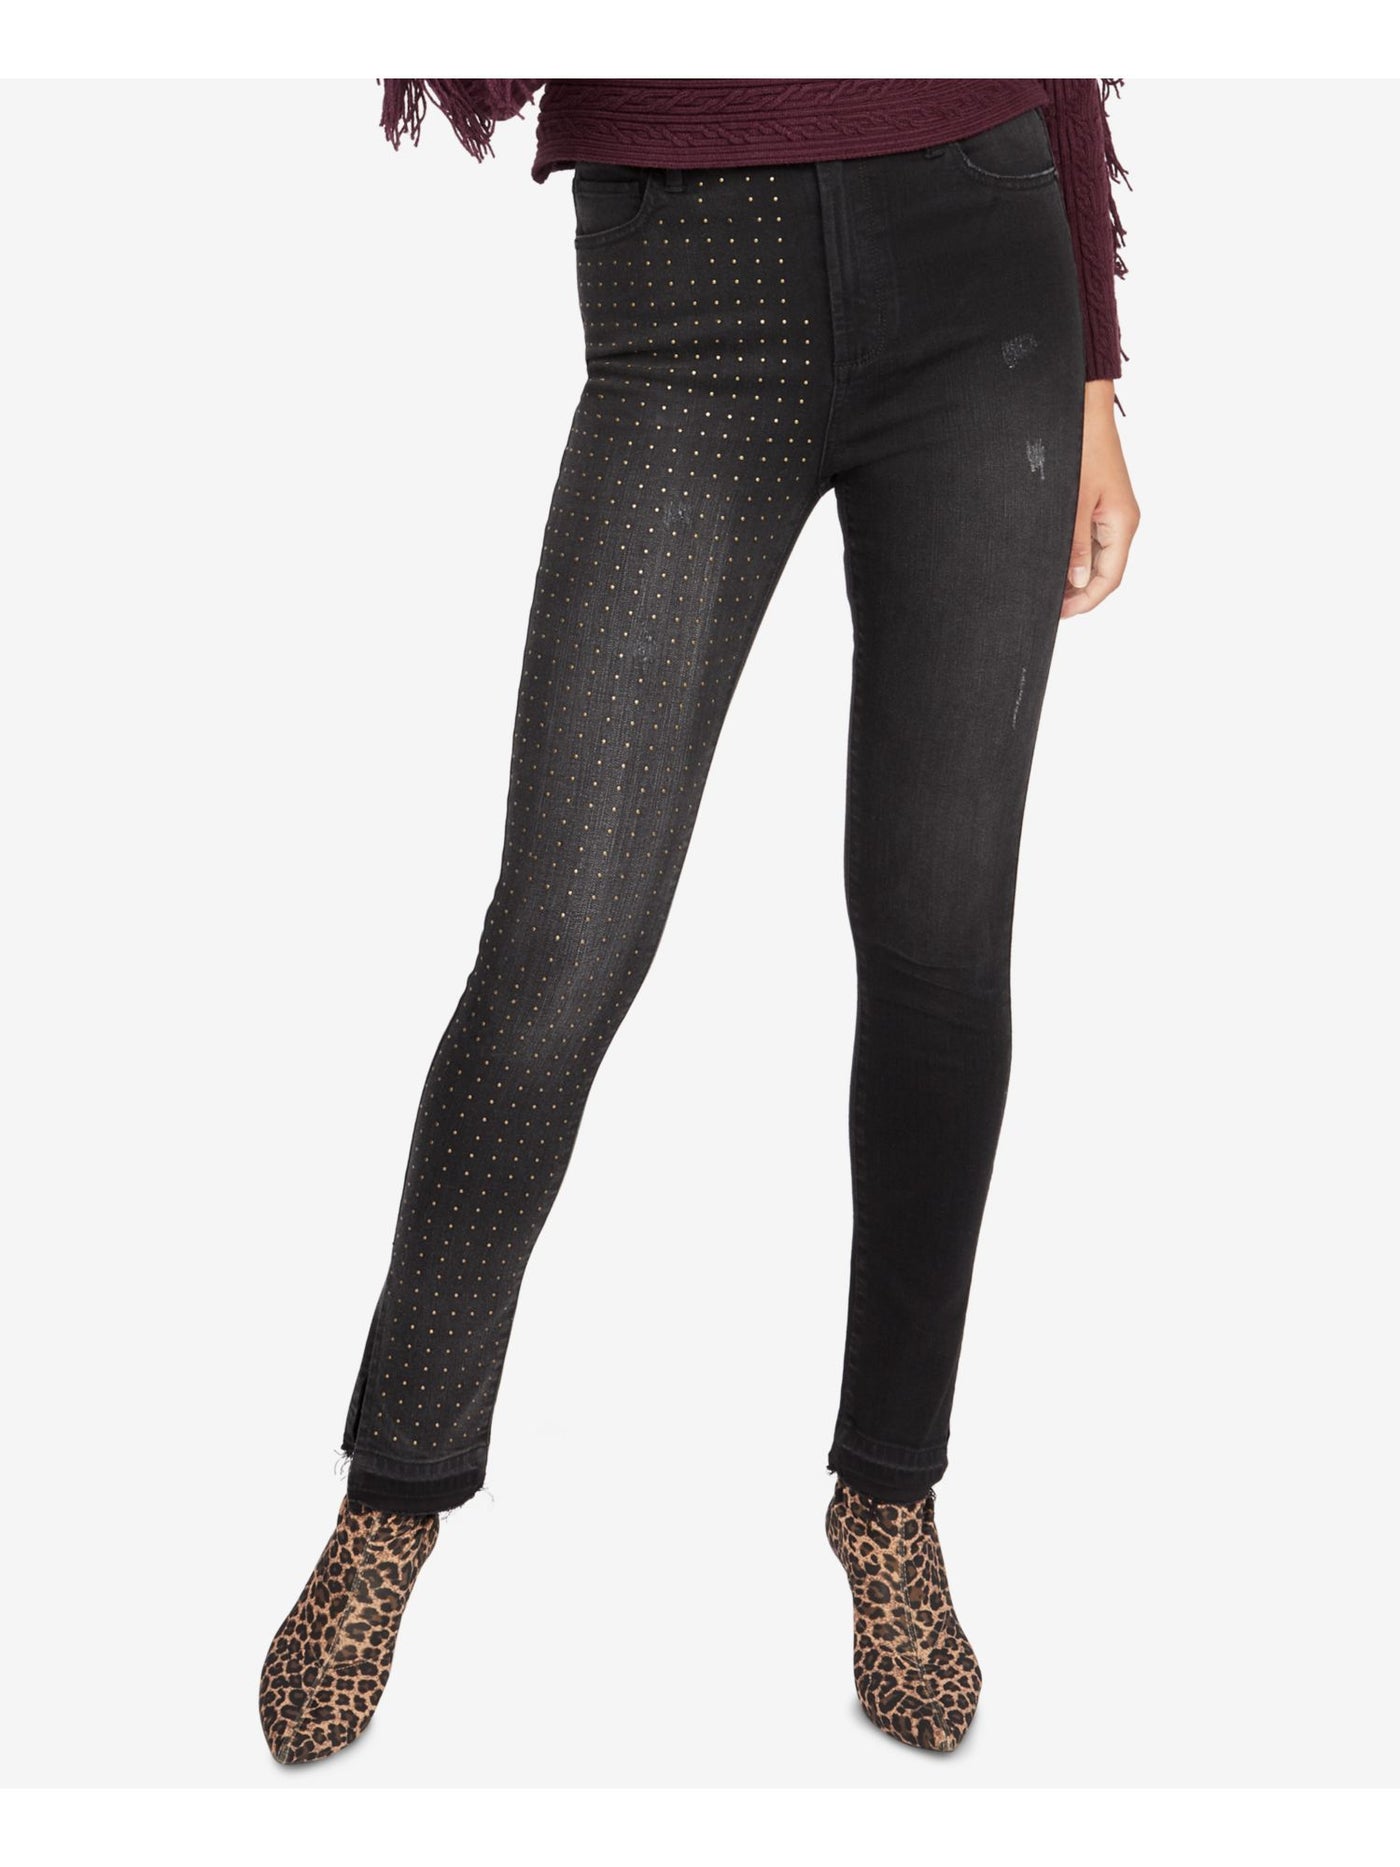 RACHEL ROY Womens Black Embellished Pocketed Skinny Jeans Size: 31